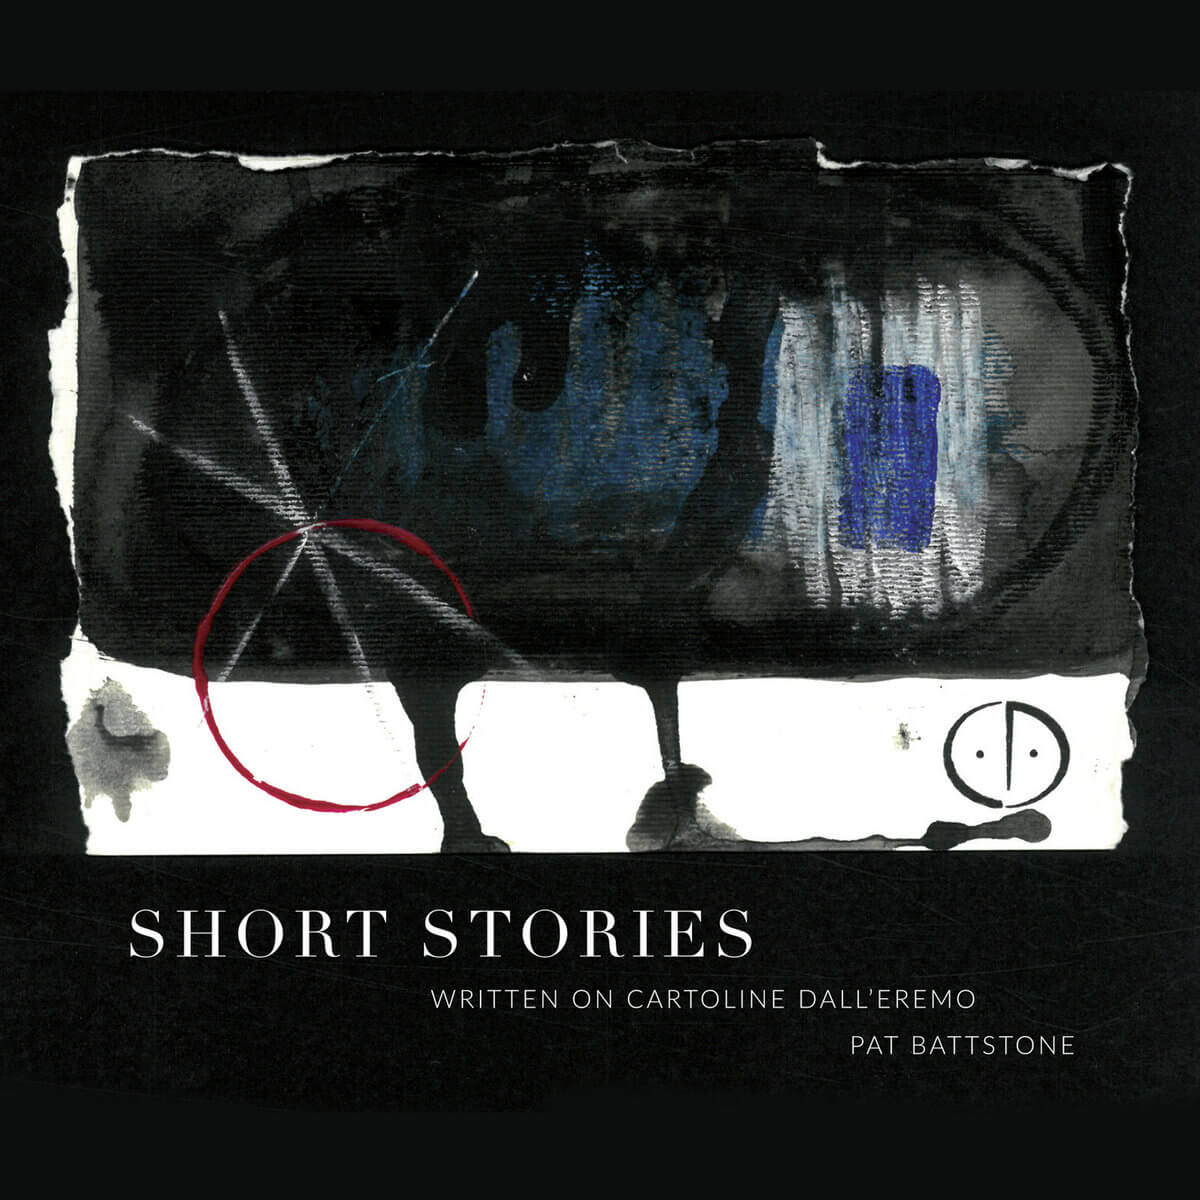 Dark album cover of abstract postcard artwork that inspired the improvisational jazz music.